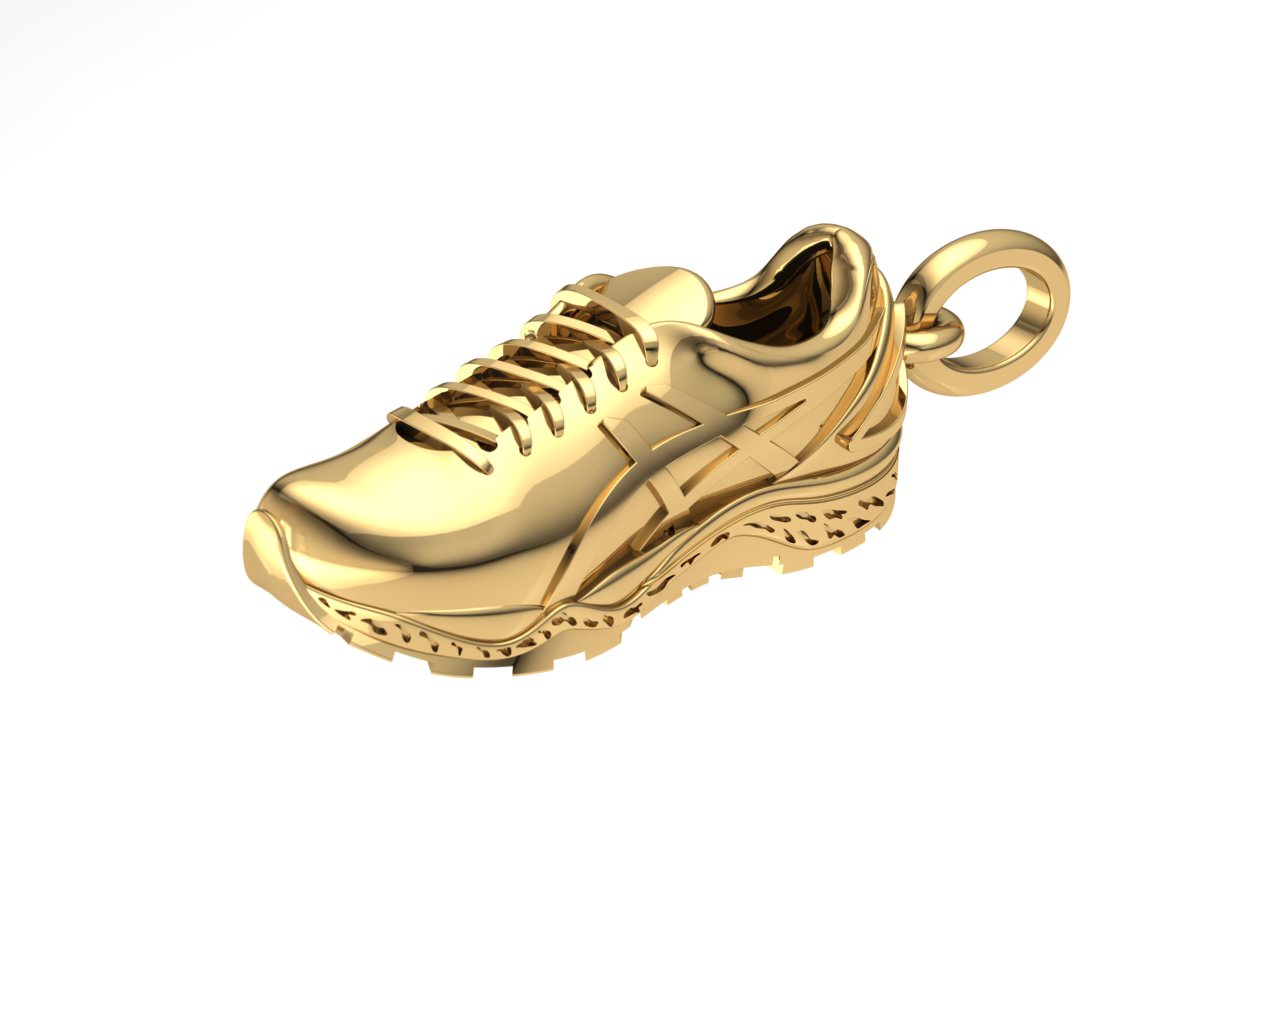 9ct Gold Running Shoe pendant/charm